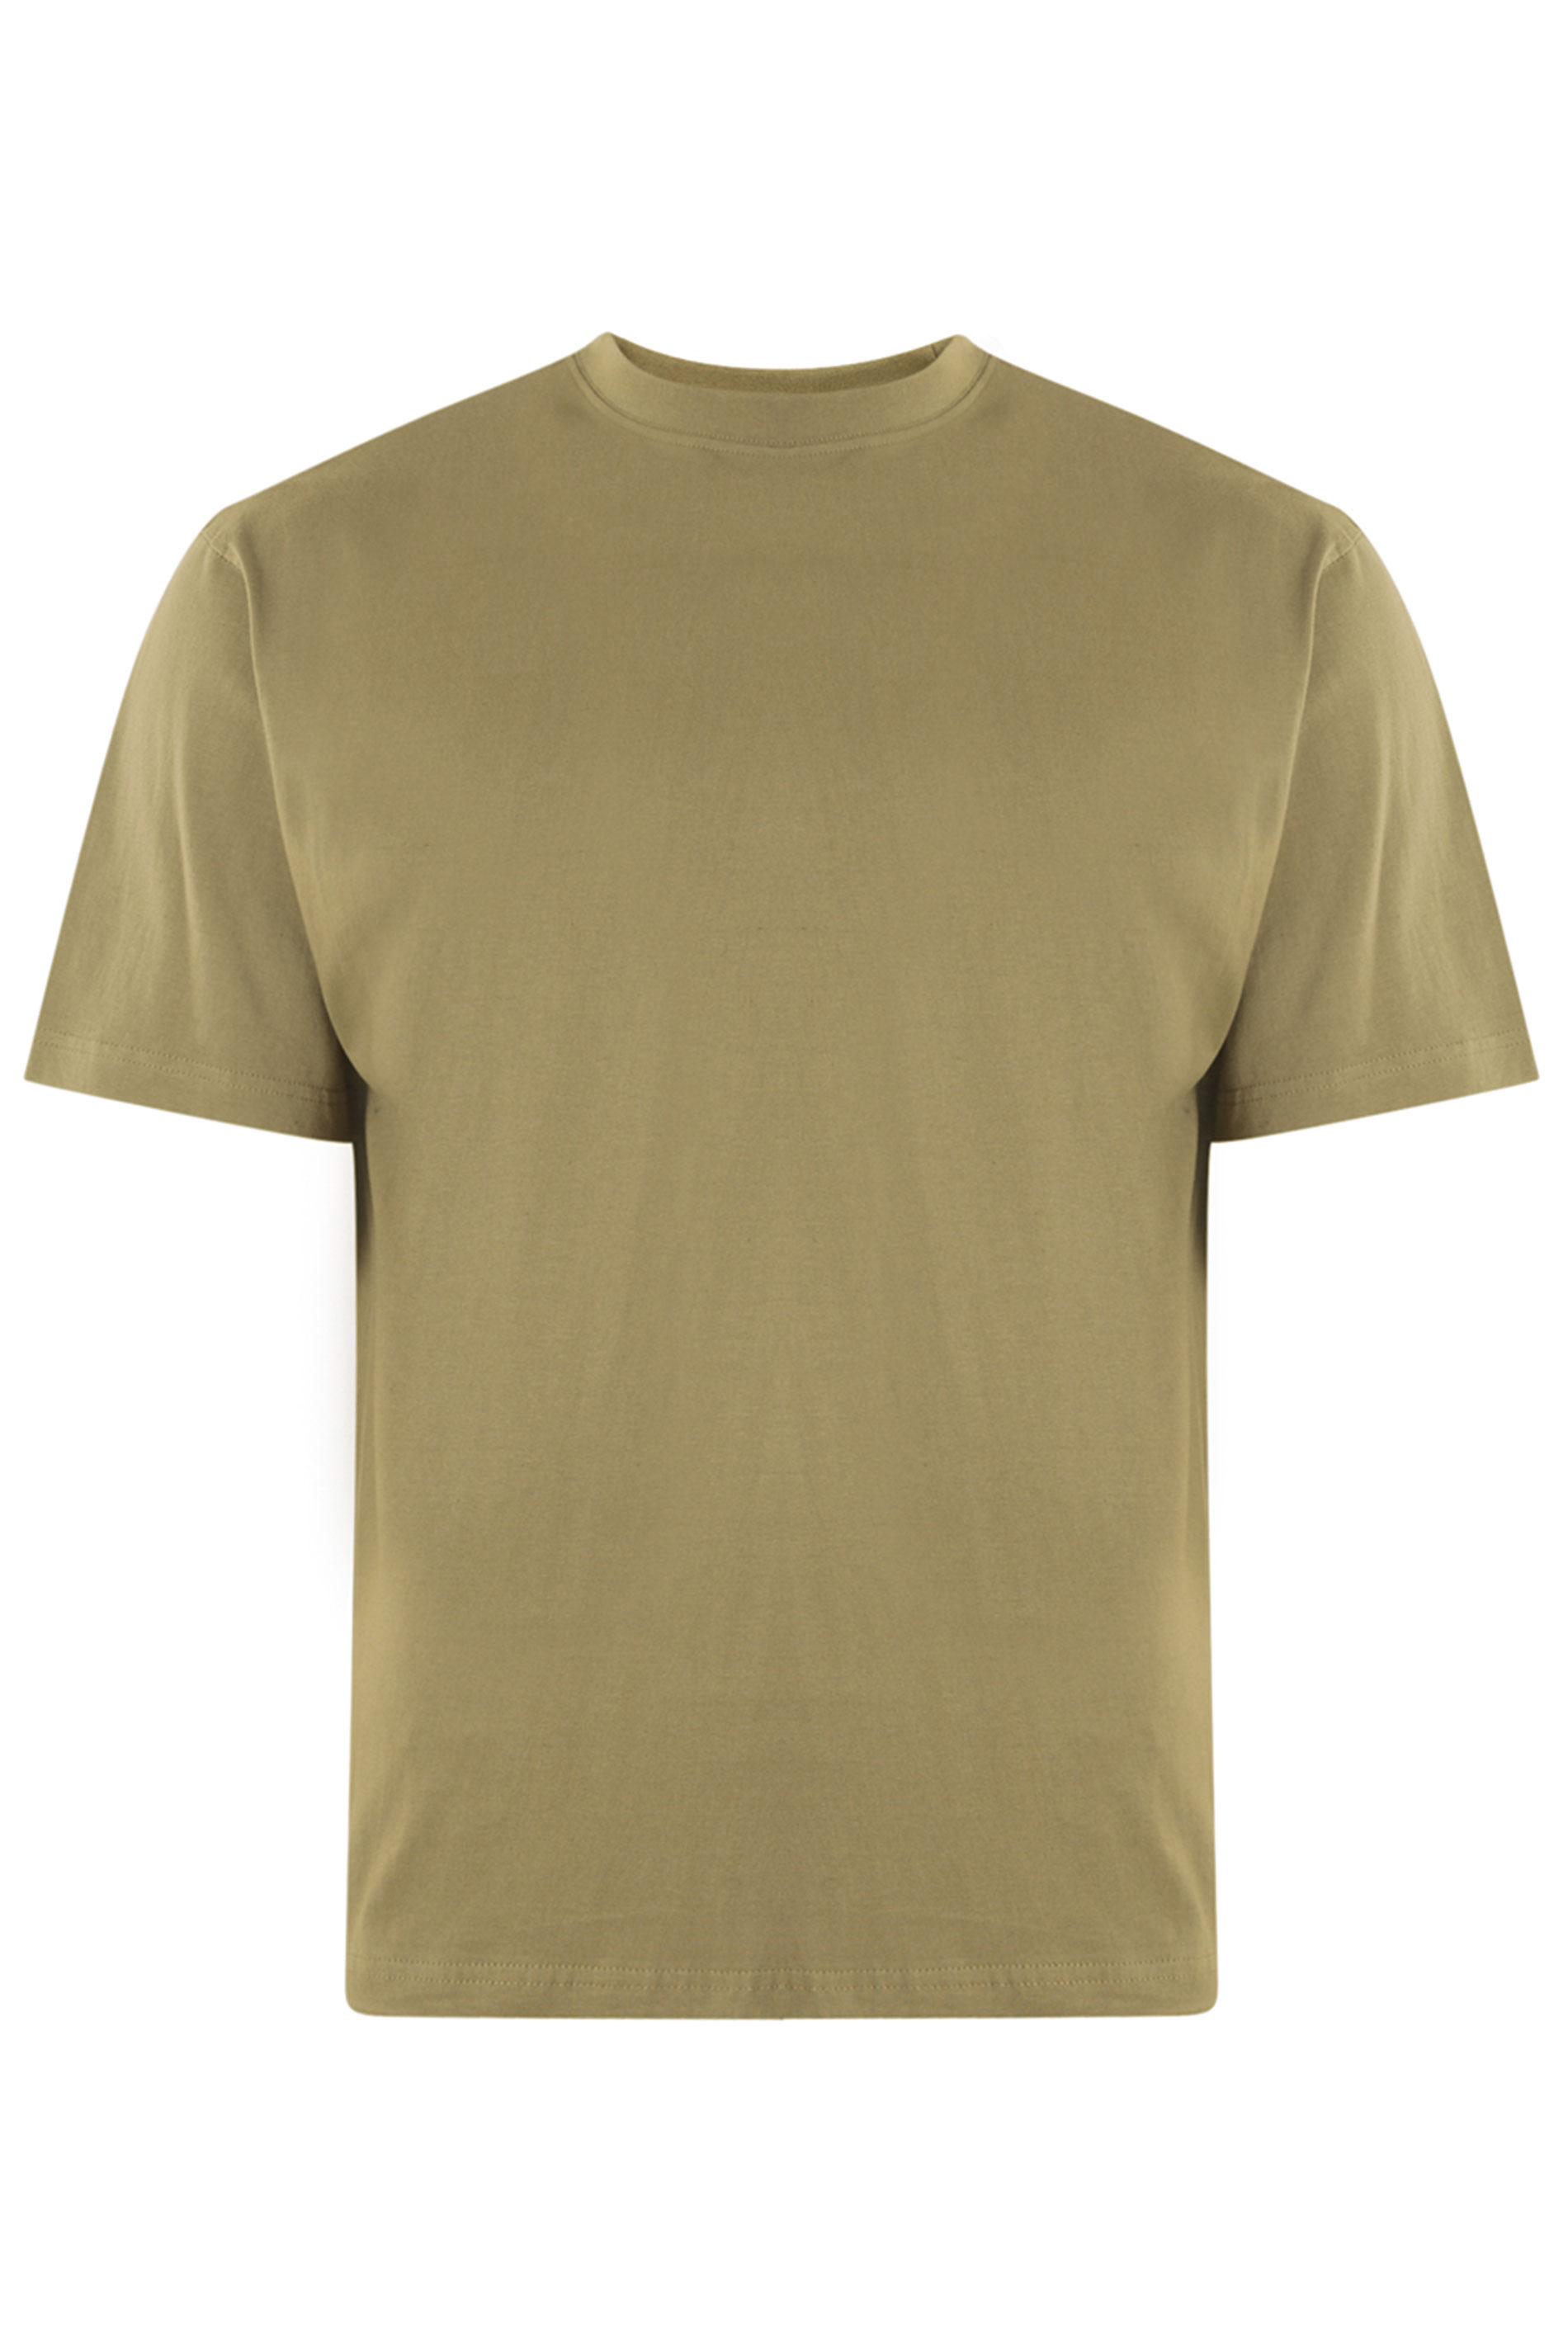 KAM Olive Green Plain T-Shirt | BadRhino 2